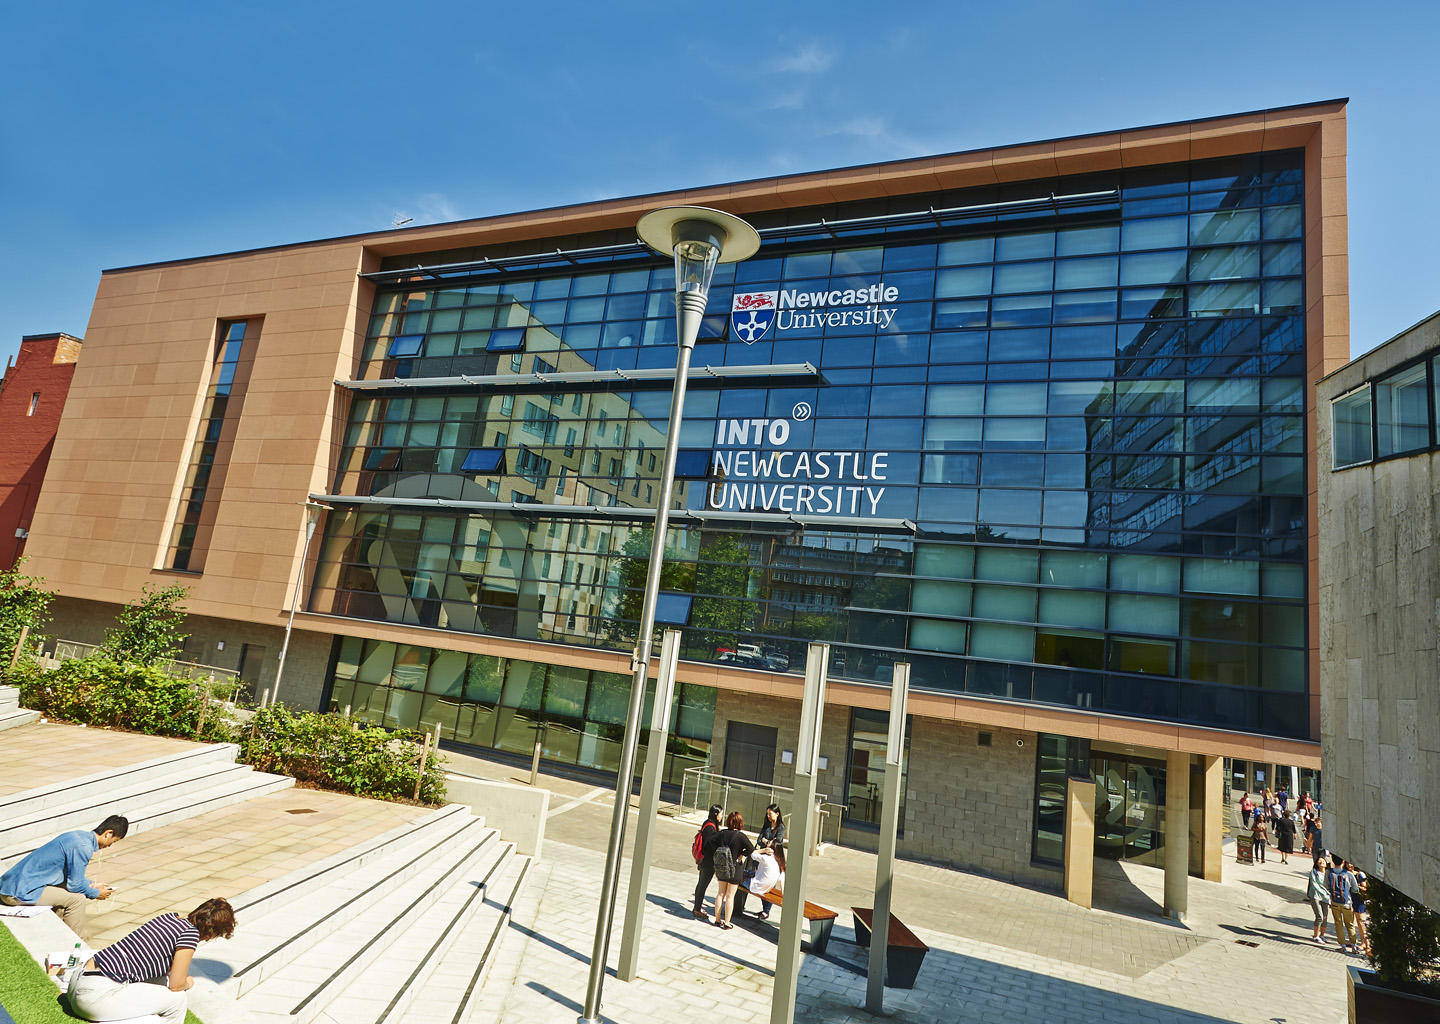 newcastle university phd tuition fees